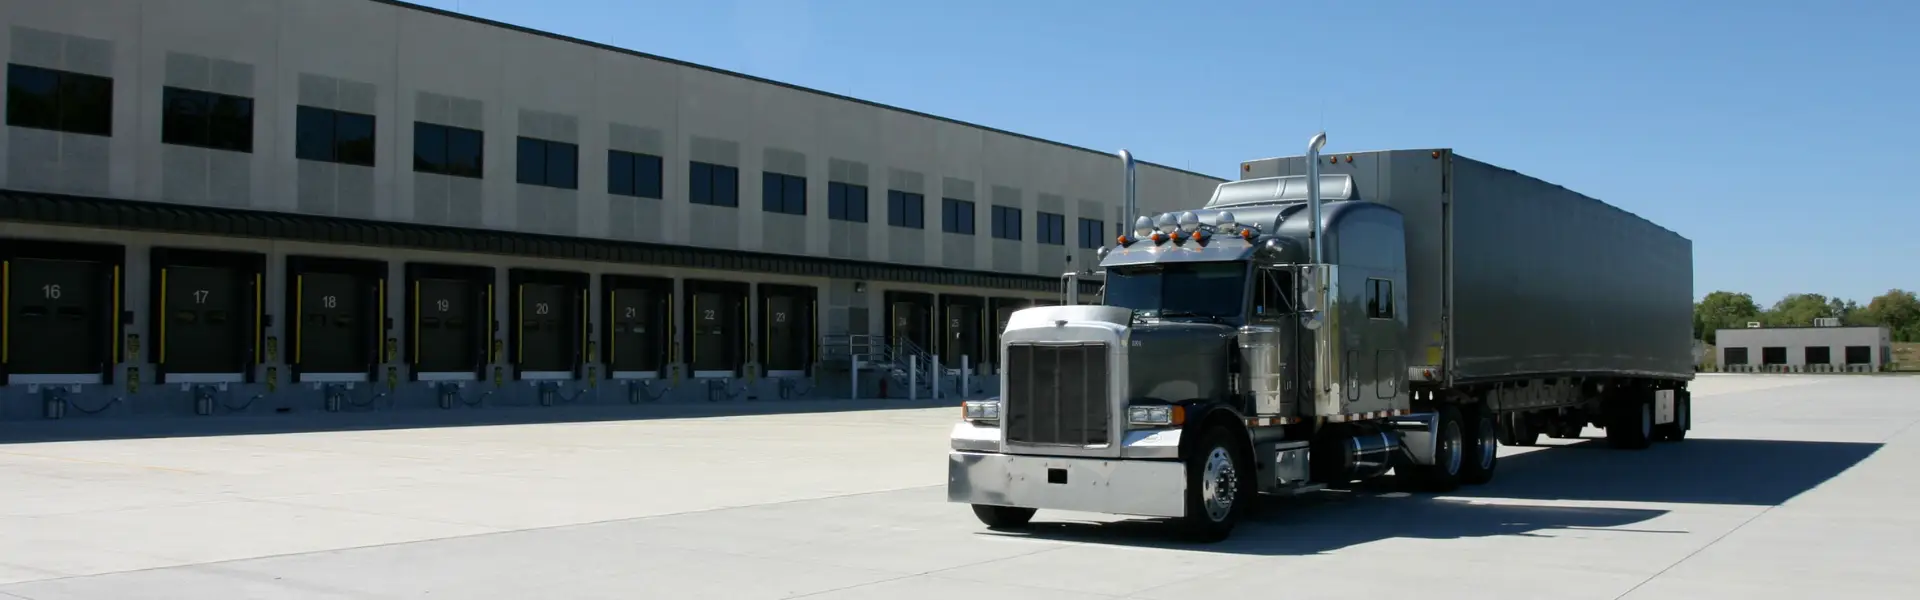 semi truck parked behind loading docks